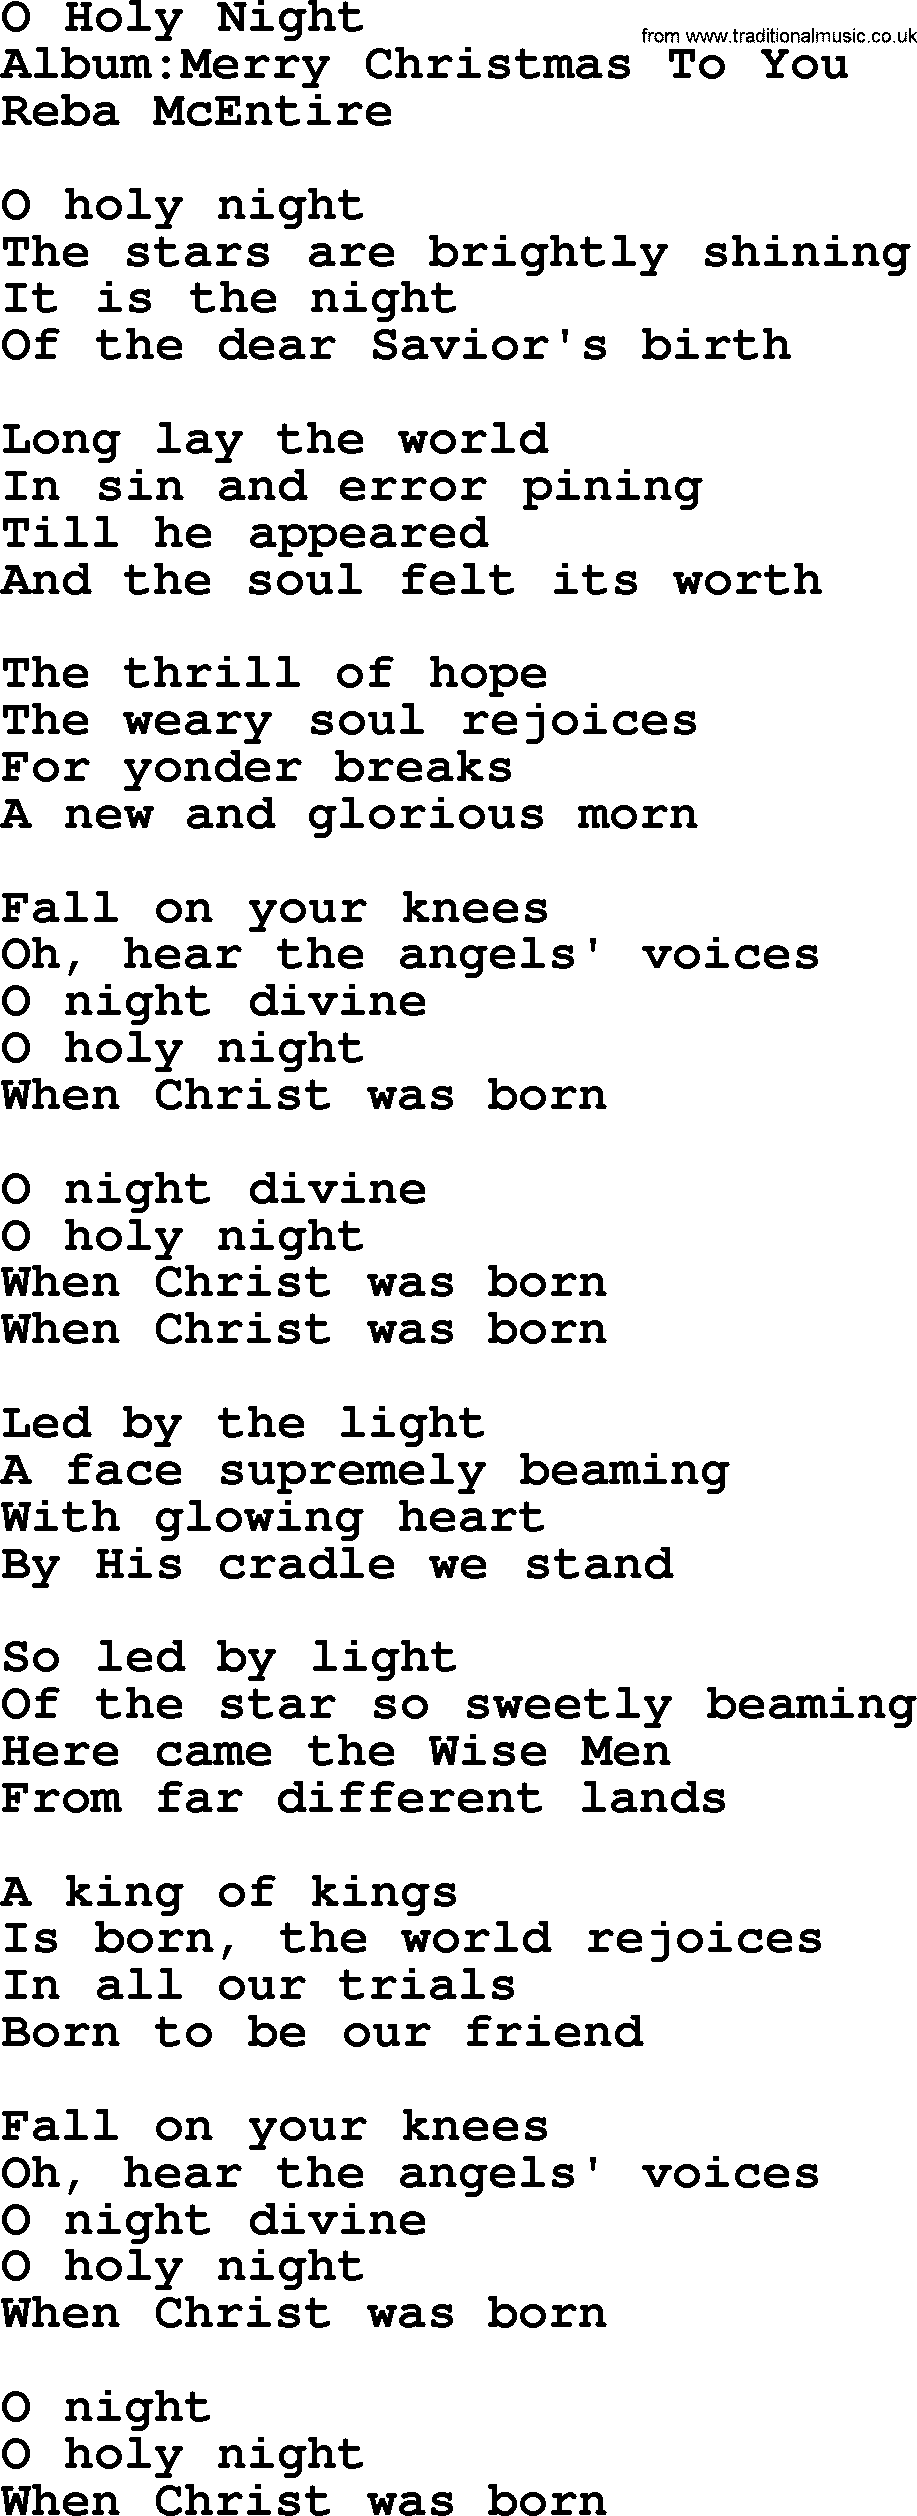 O Holy Night, by Reba McEntire - lyrics